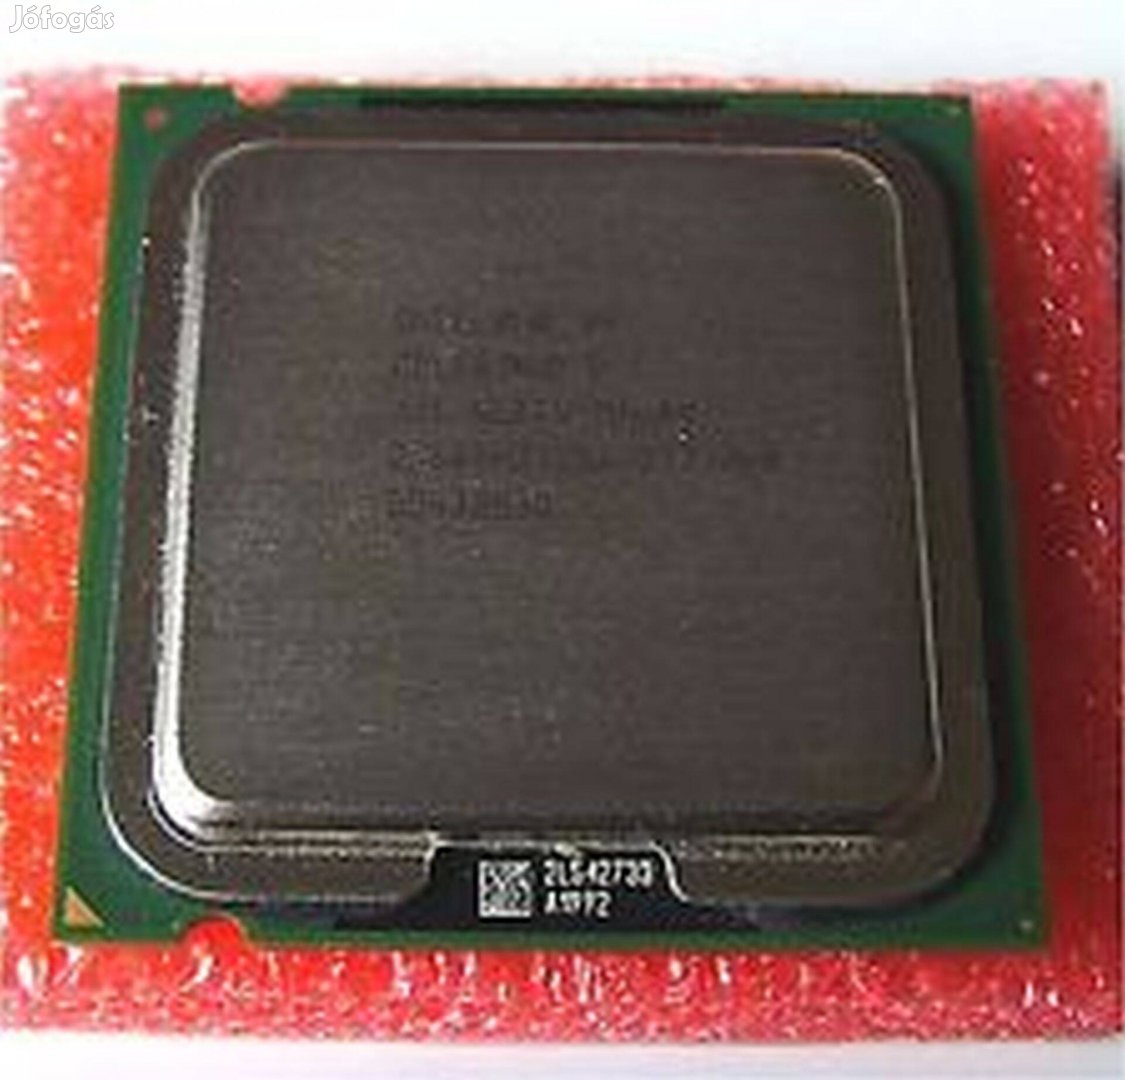 S775 CPU Processzor Celeron D351 3.20GHz